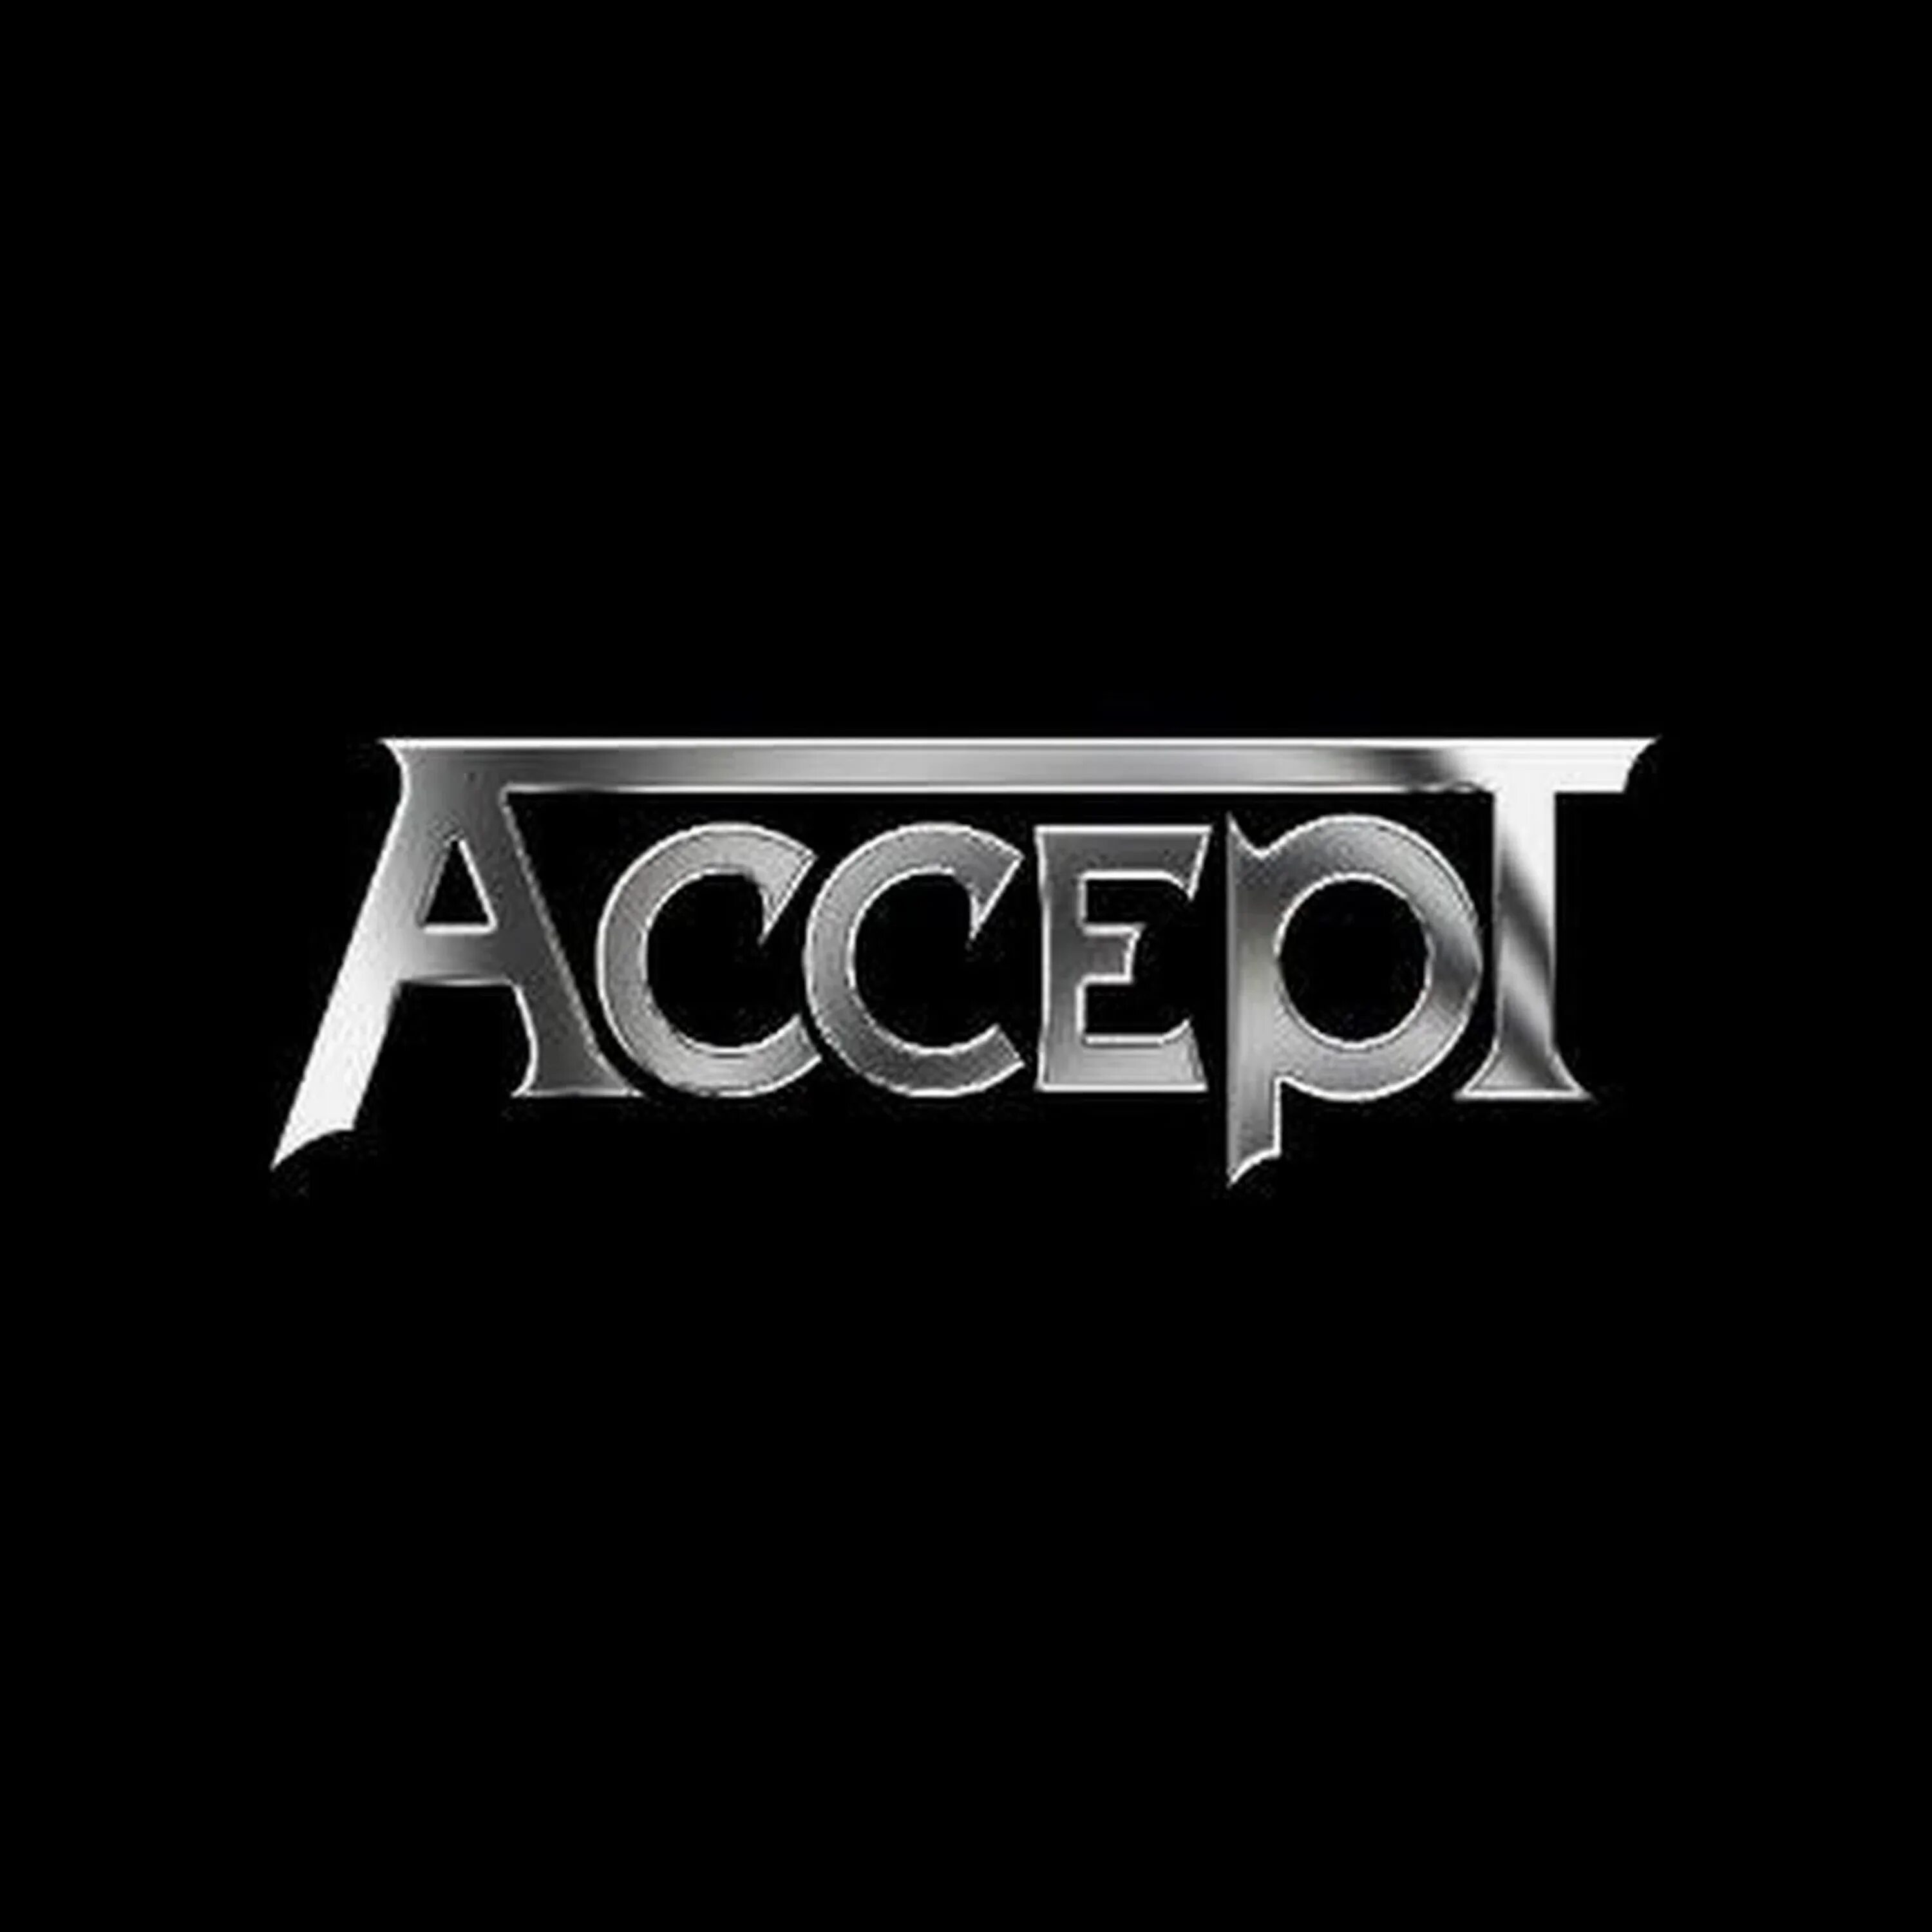 Http accept. Accept логотип группы. Группа accept обложки. Эмблема Akcept. Accept надпись.